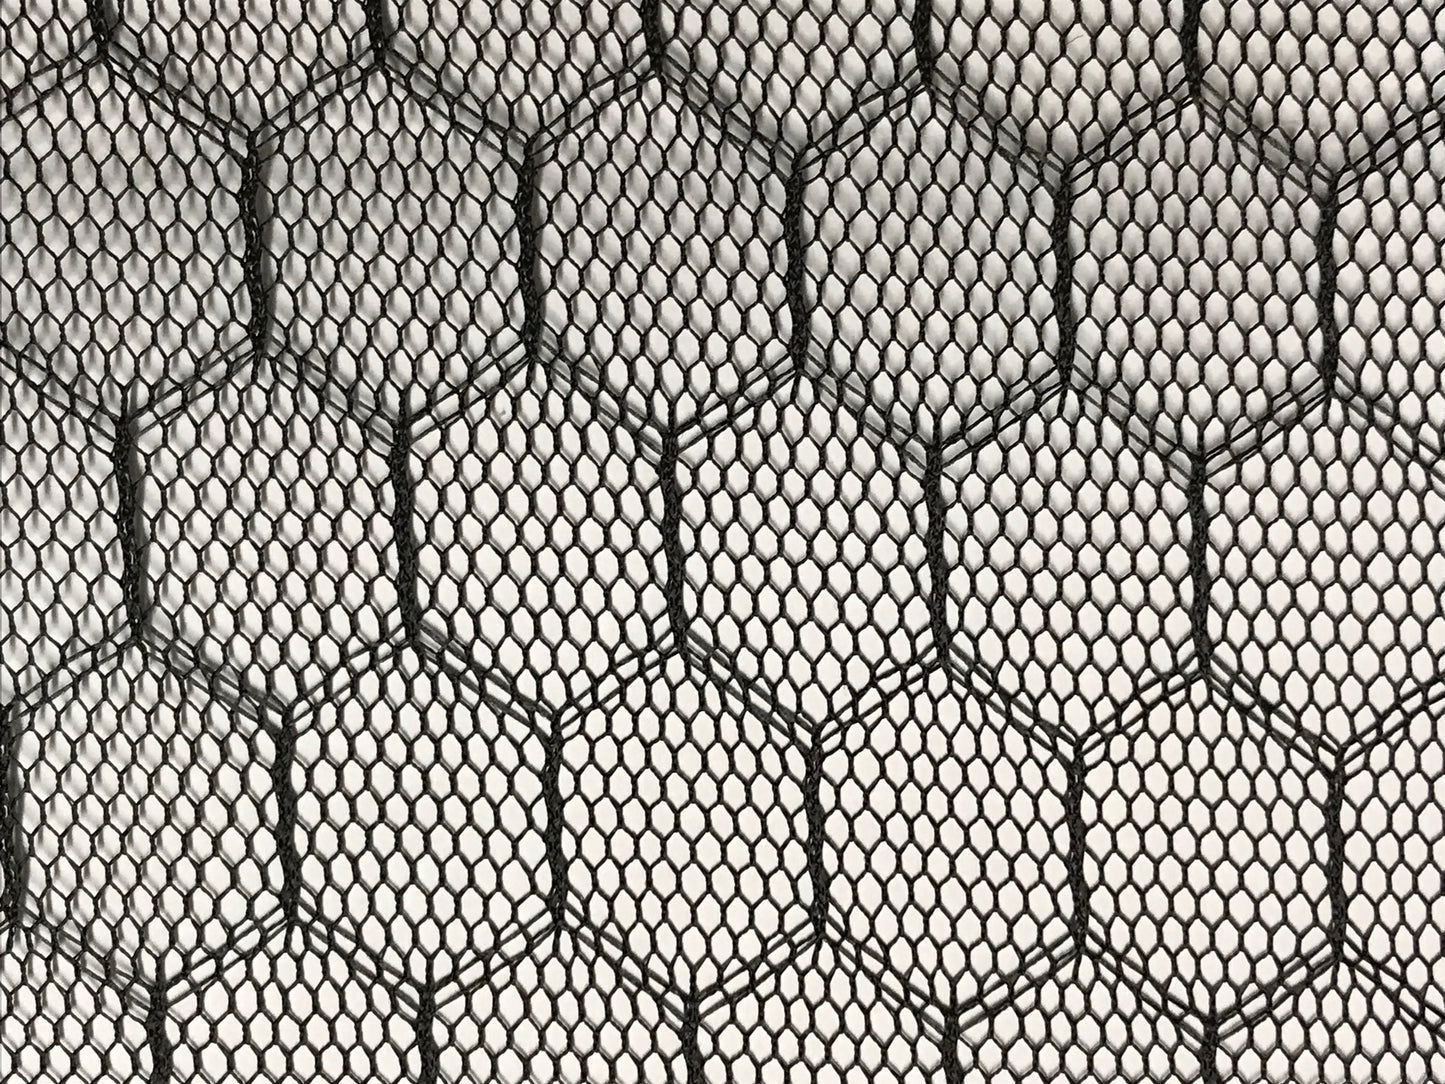 124 - Fine Honeycomb Net